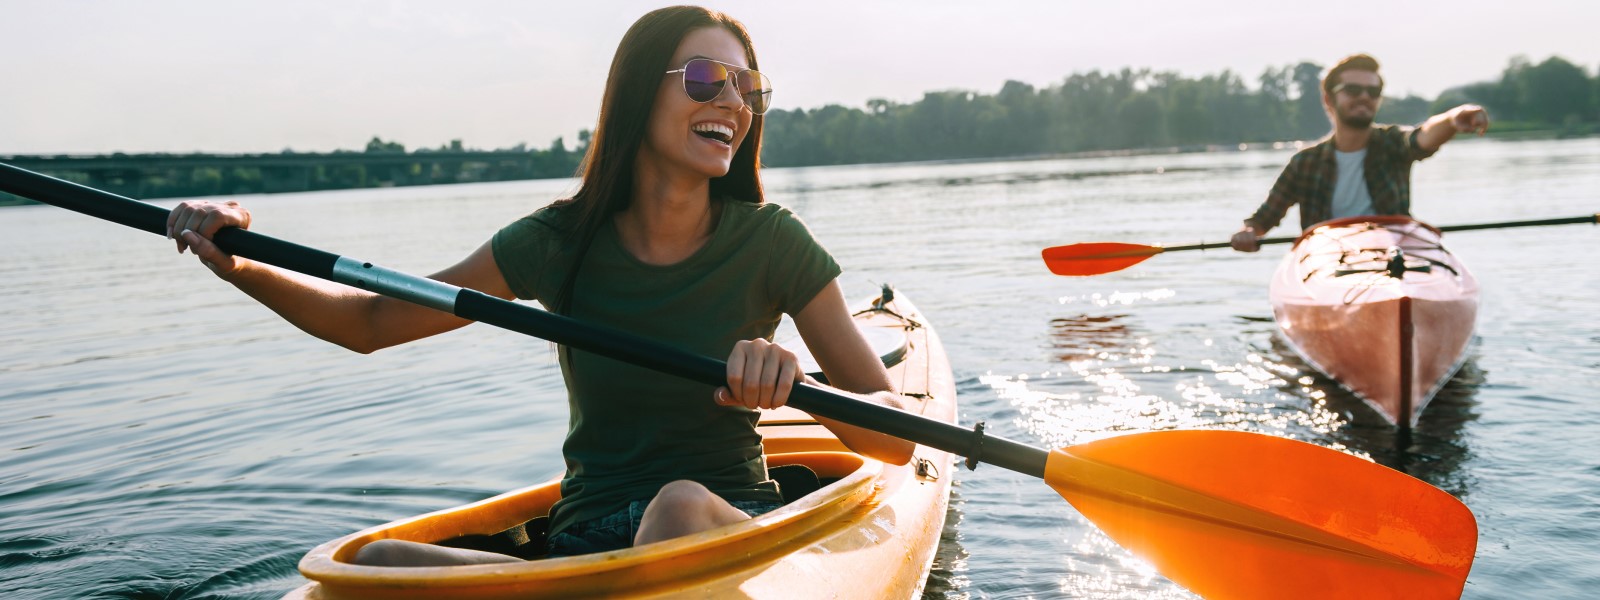 woman and man kayaking and smiling